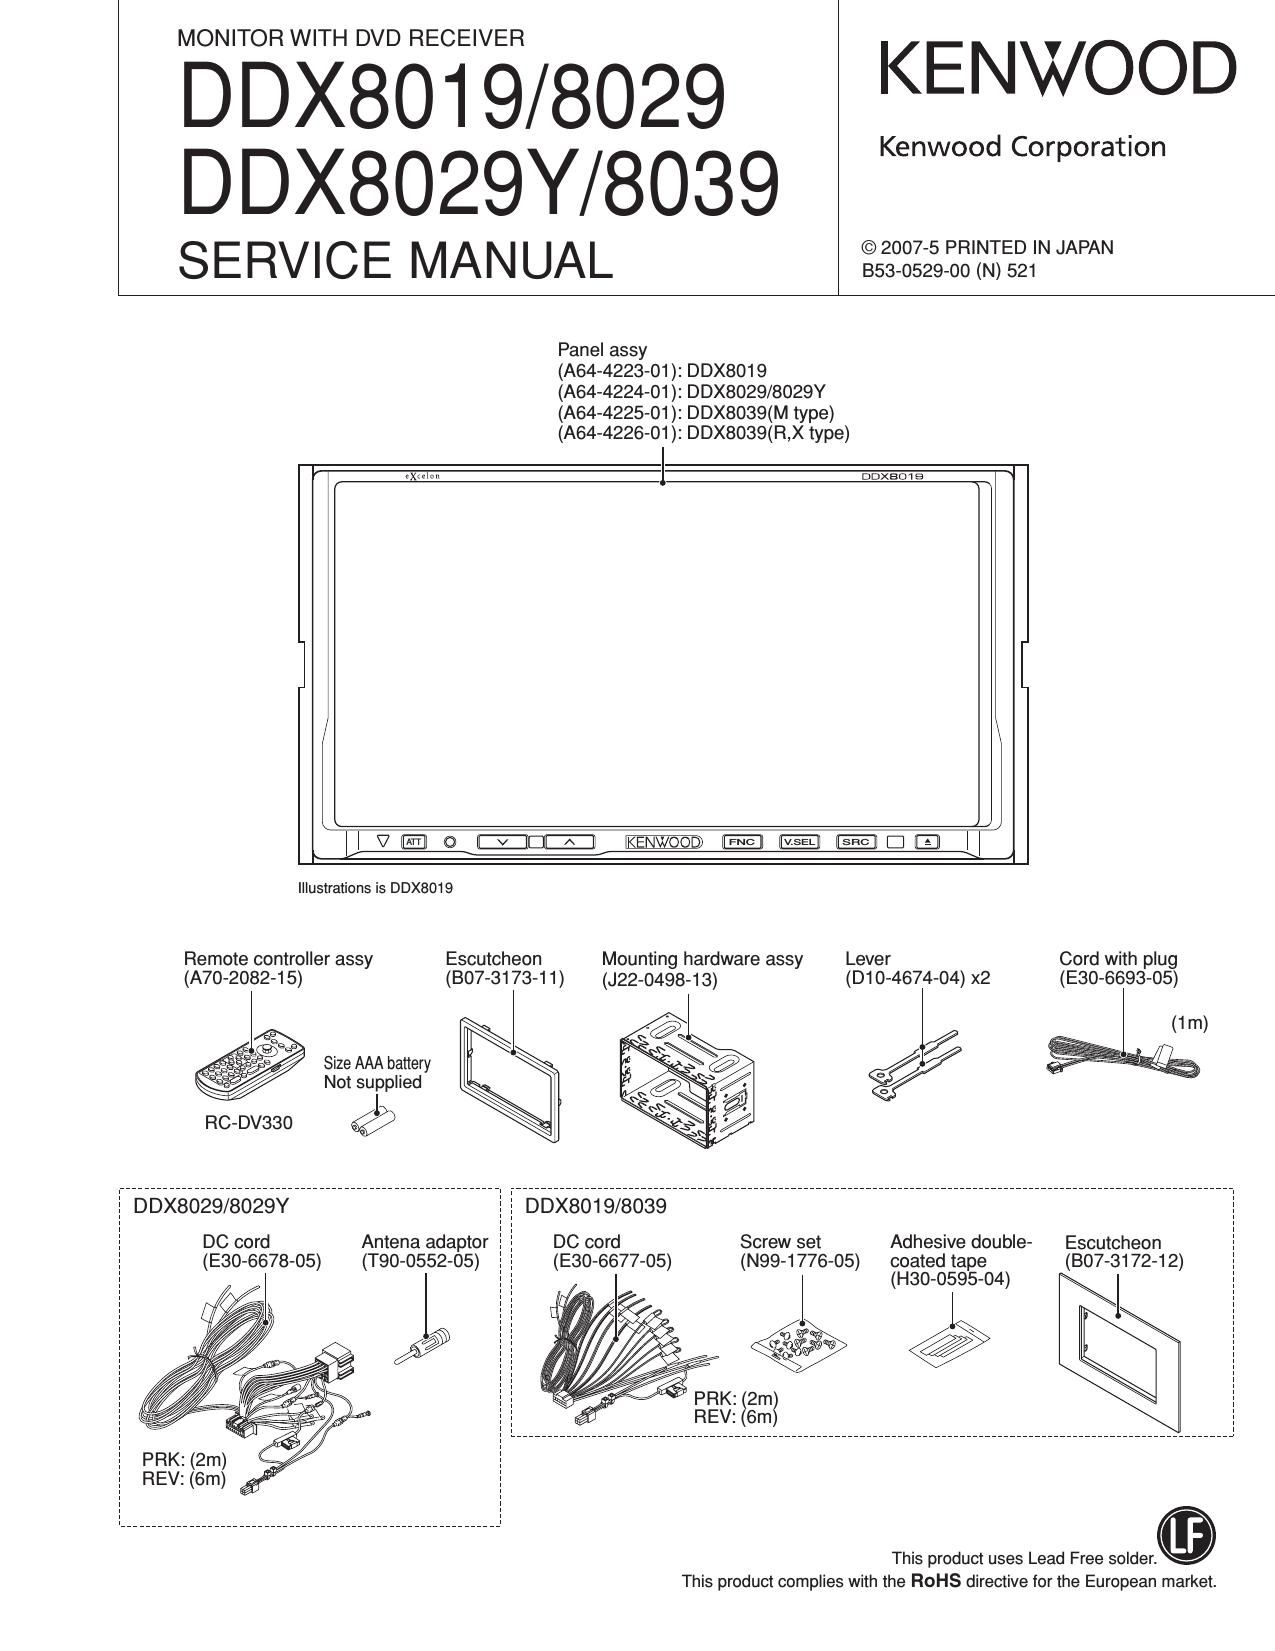 Kenwood DDX 8029 Service Manual